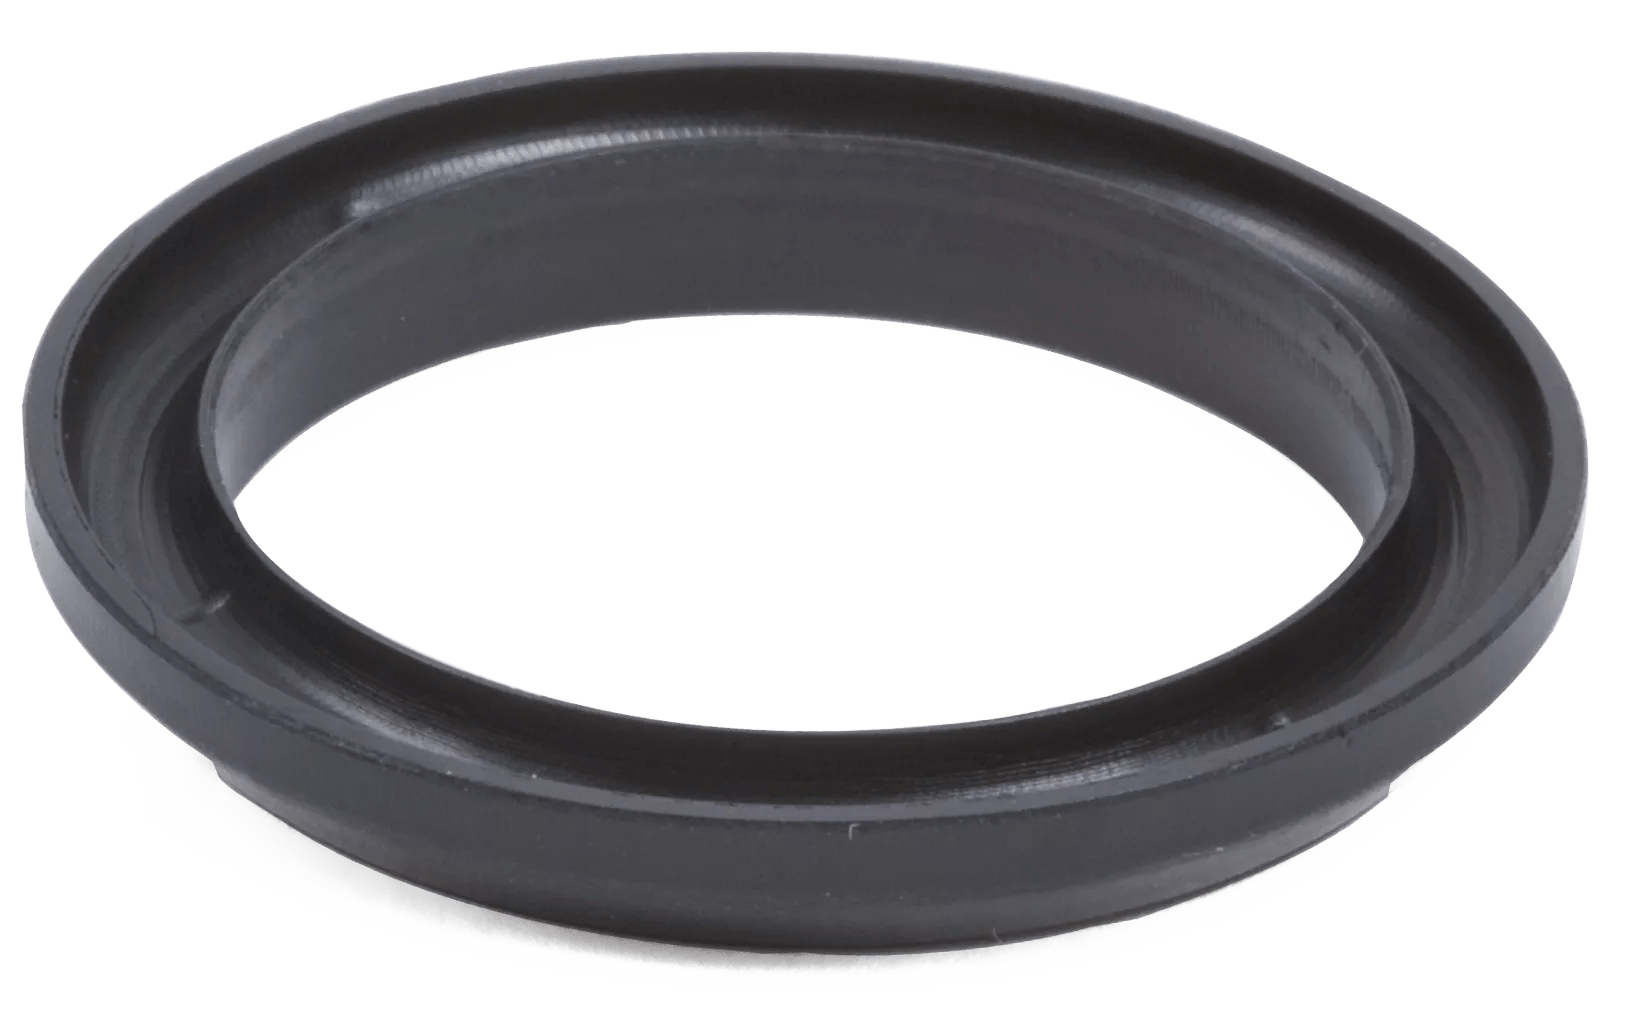 Black Fluid (Petroleum-Based & Water-Based Fluids) Transfer Pump Replacement Seals